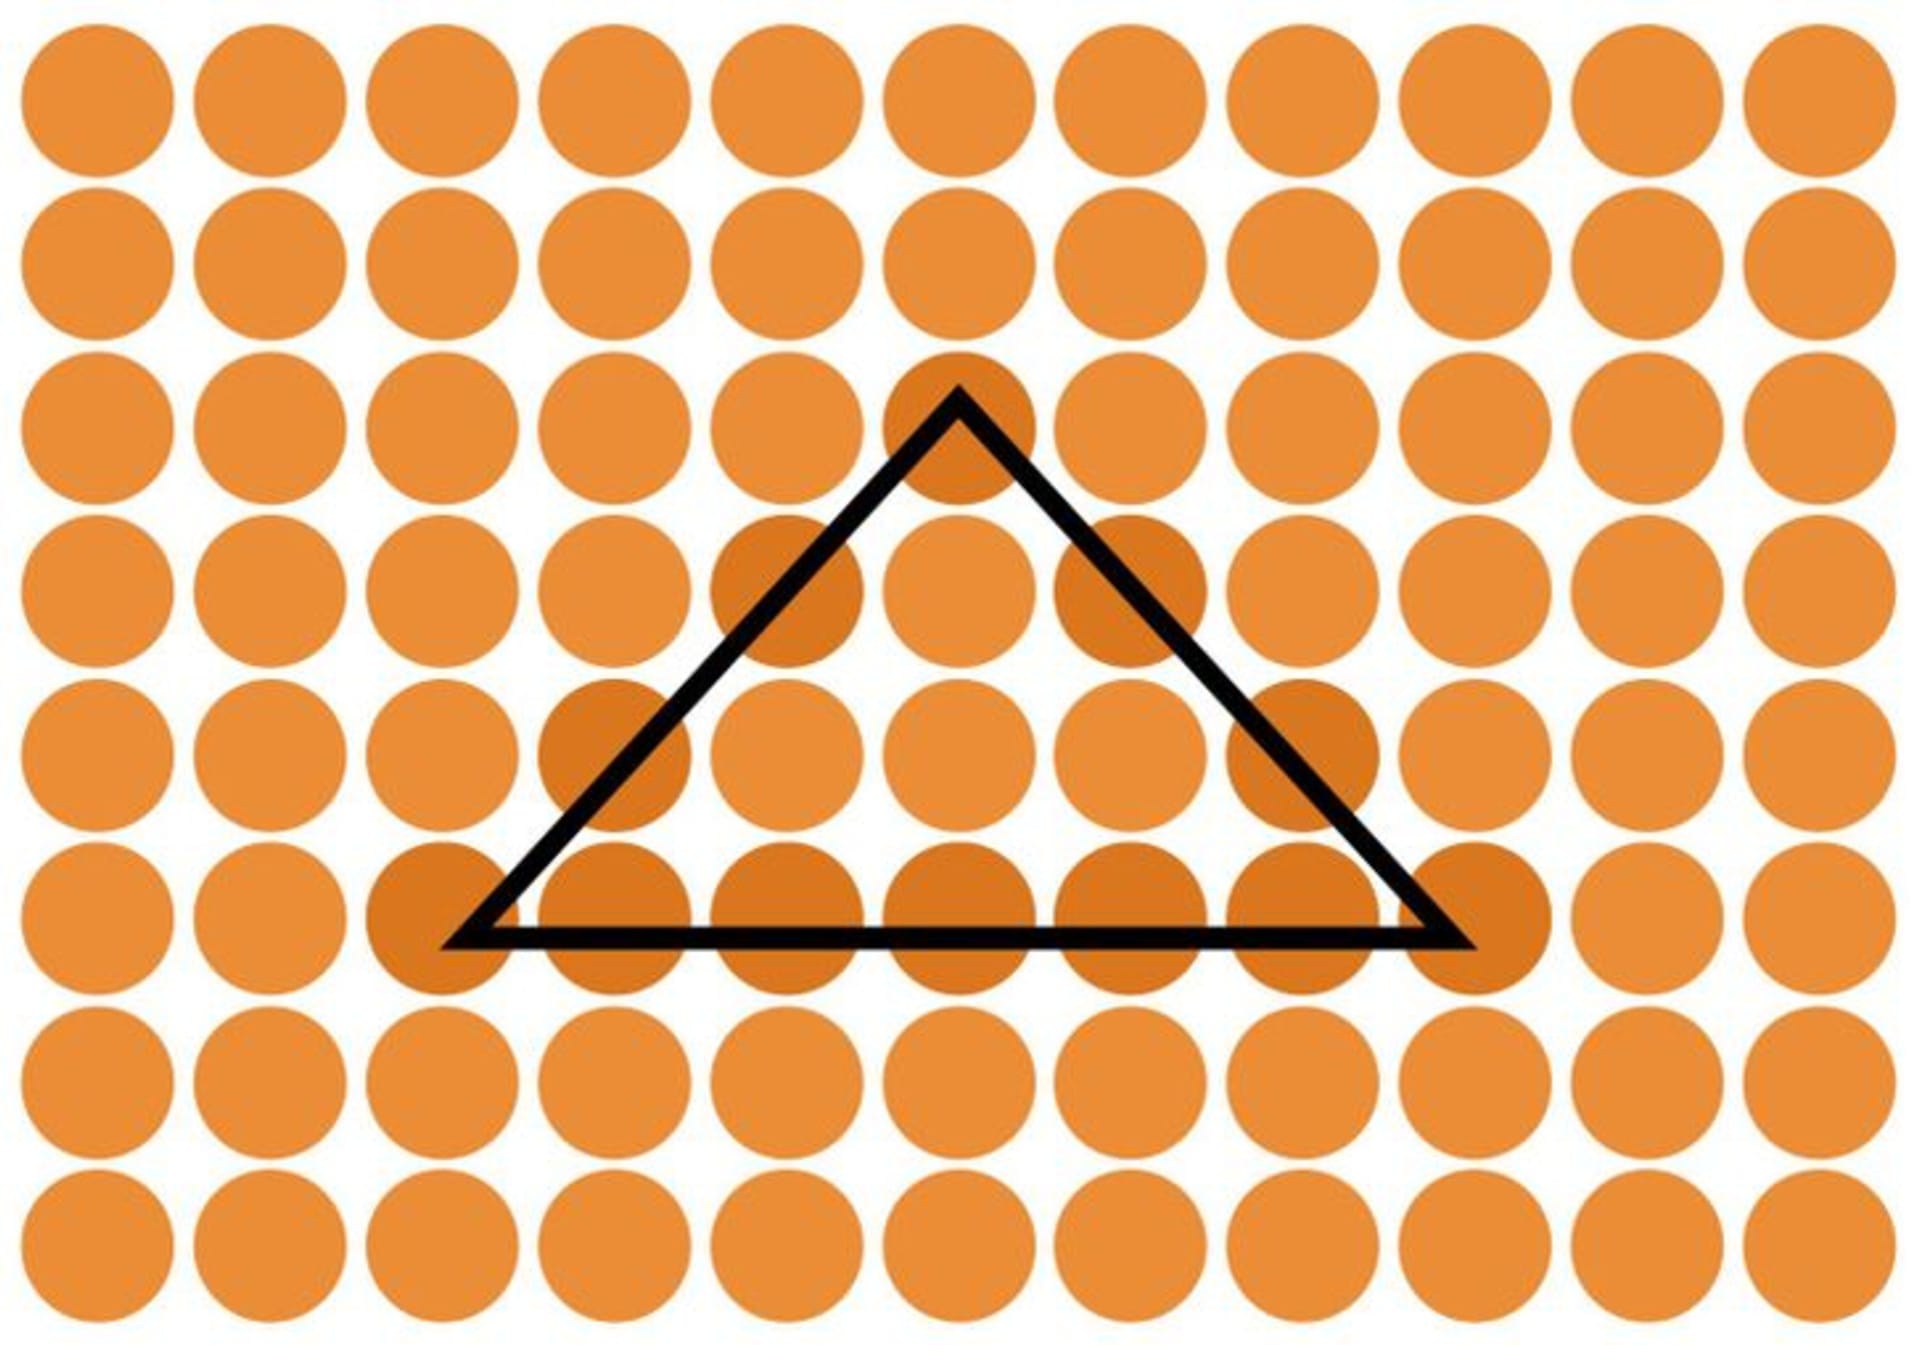 Najdete na obrázku trojúhelník? 2